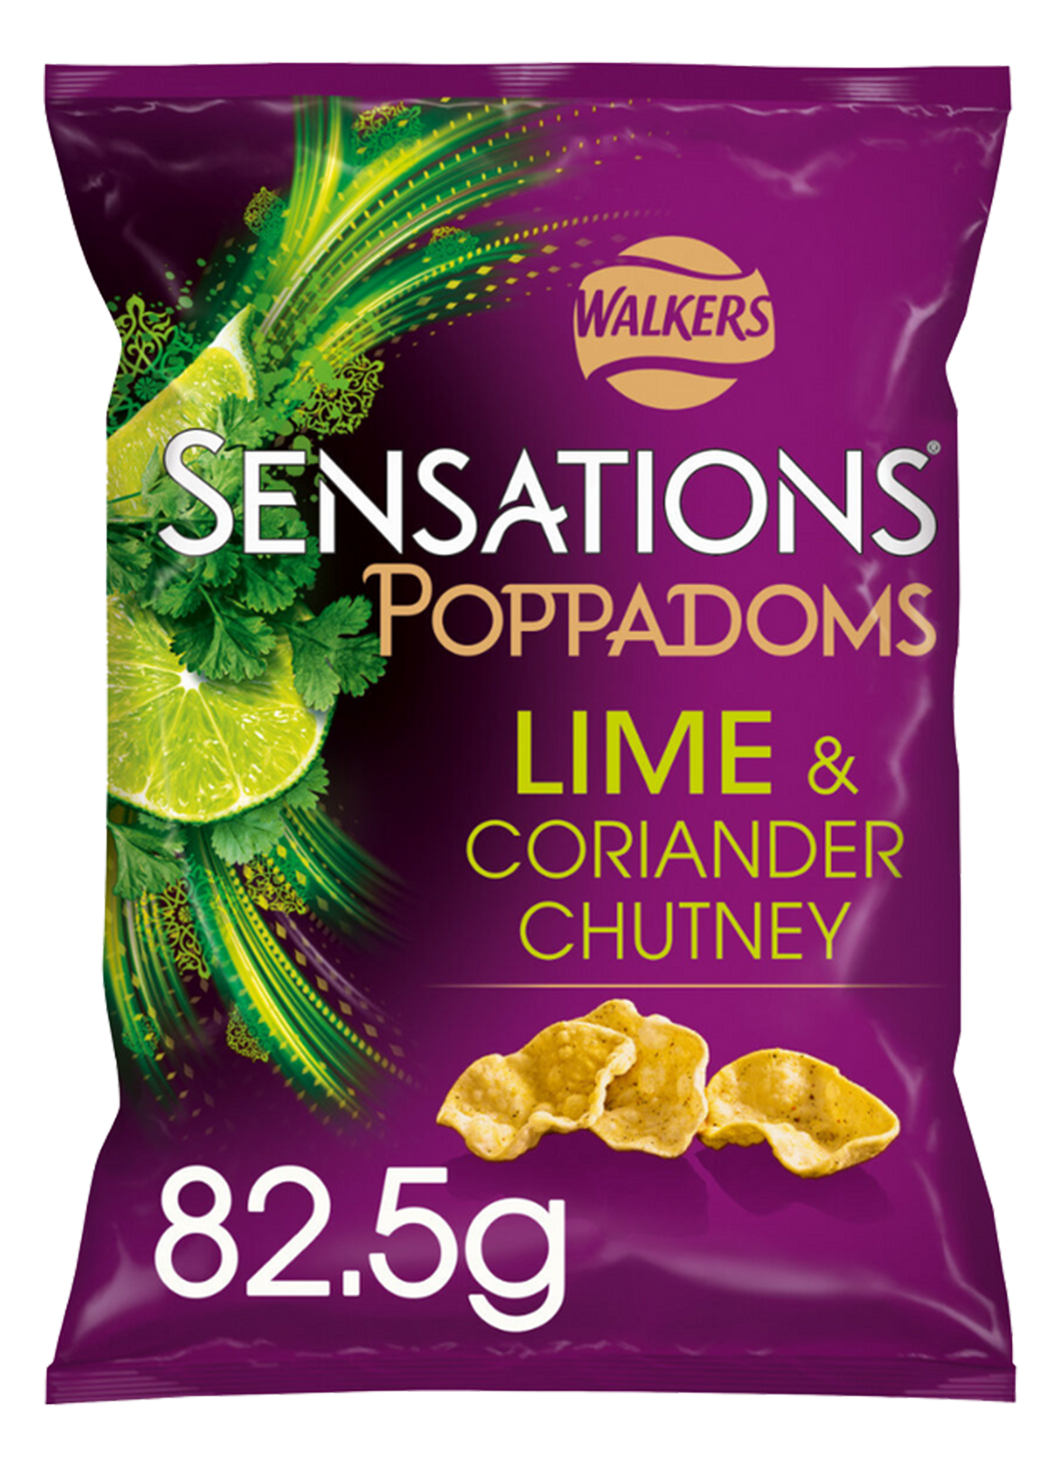 Walkers Sensations Poppadoms Lime & Coriander Chutney Crisps Chips 82.5g